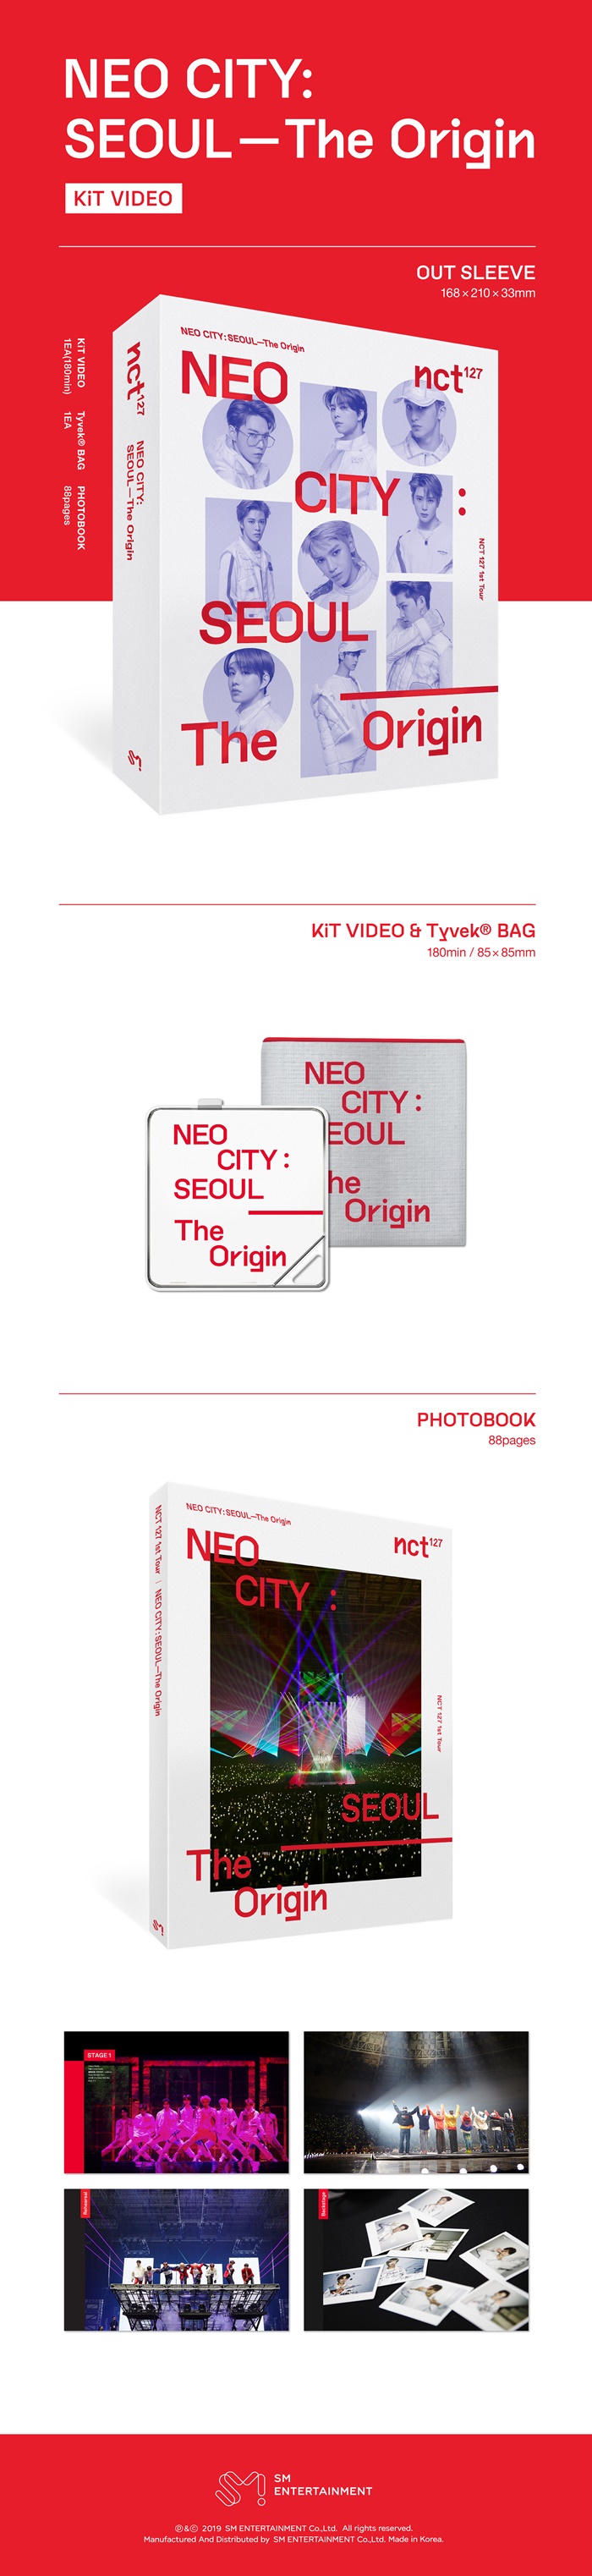 NCT - NEO CITY SEOUL - Kit Video